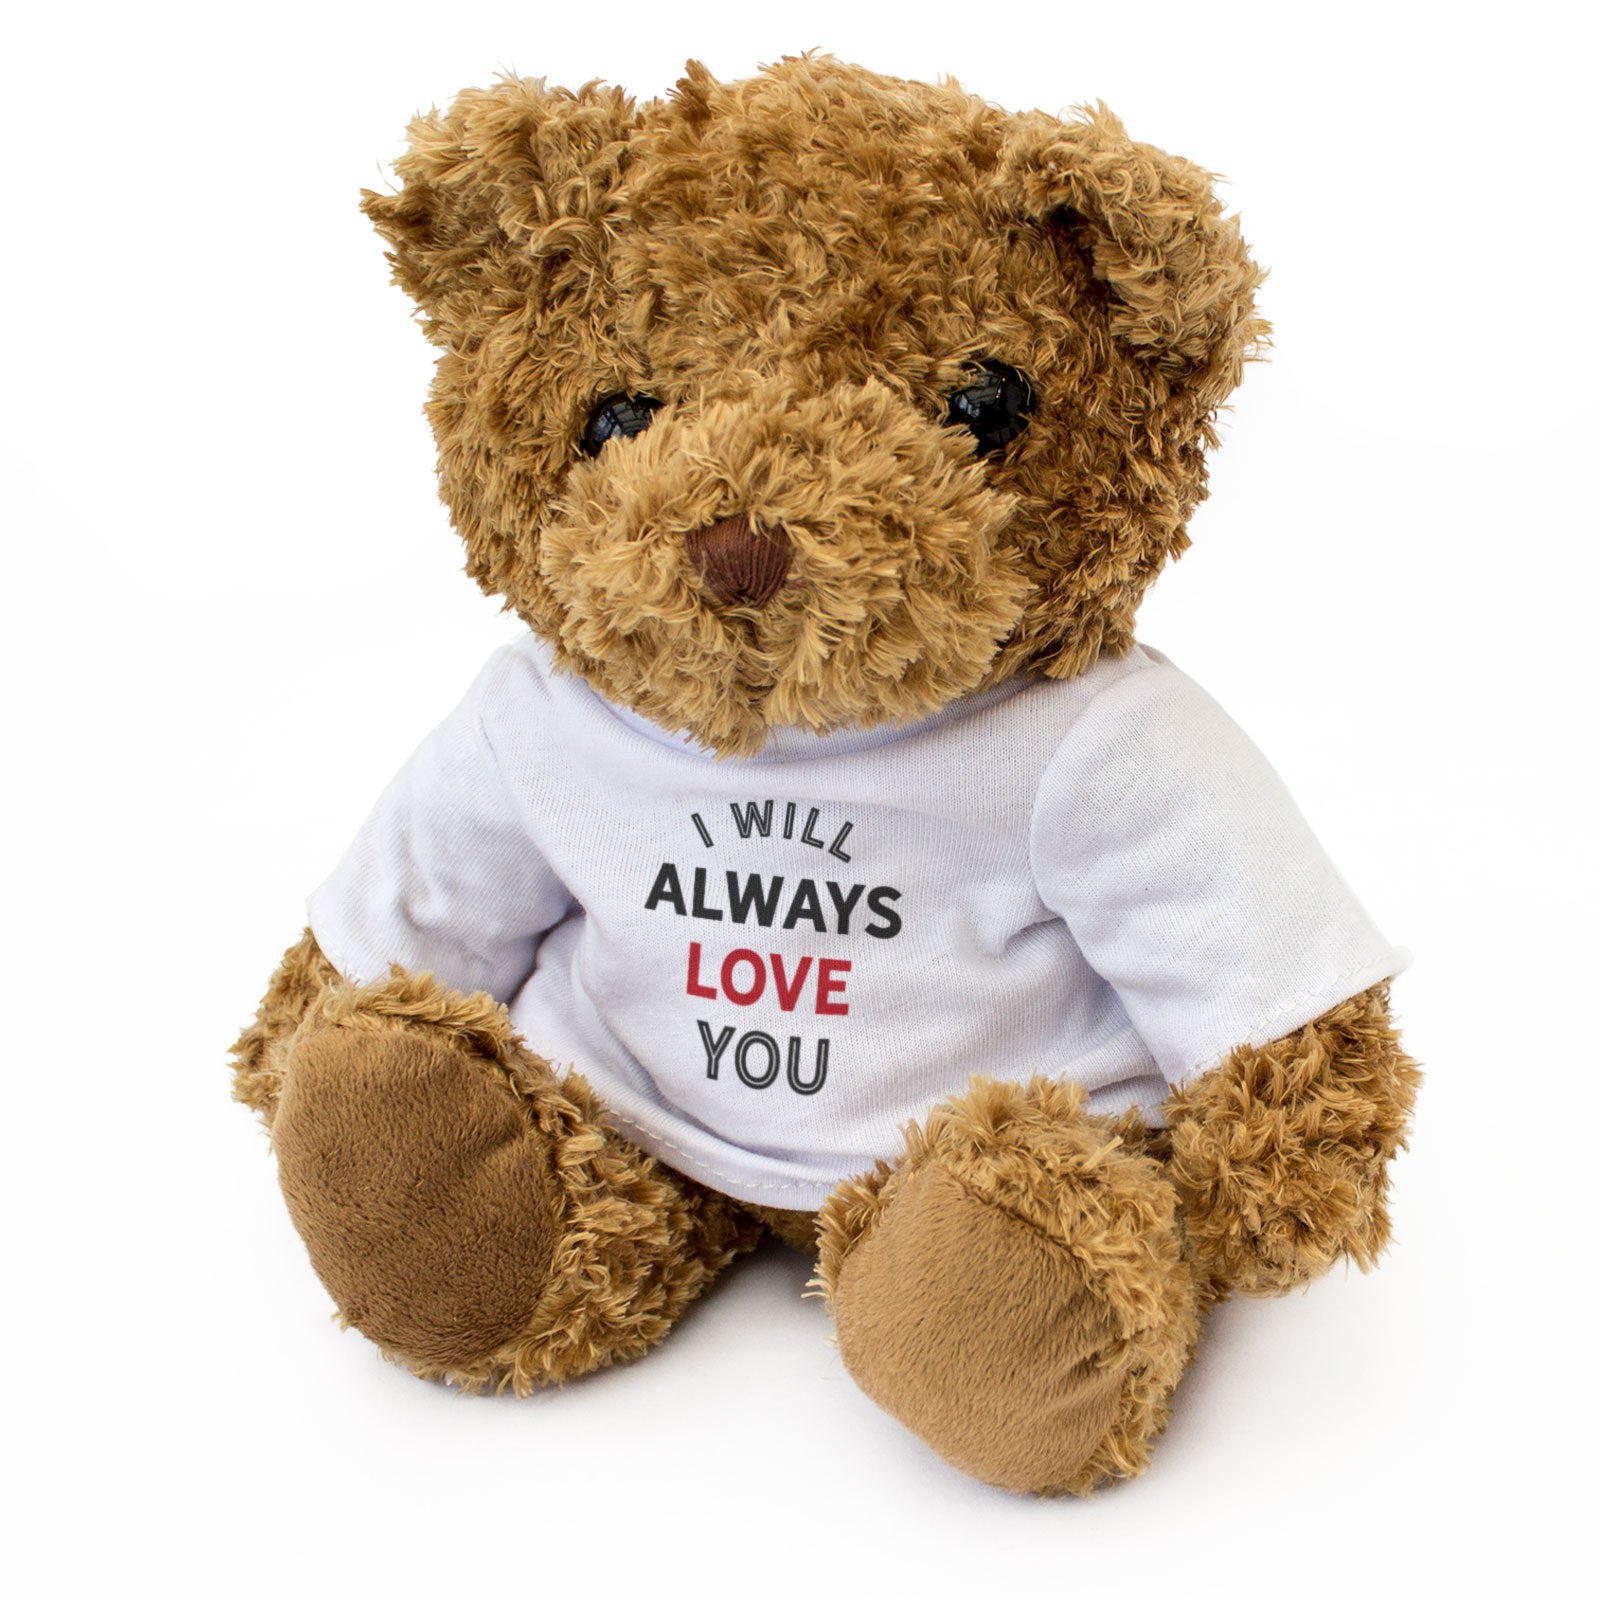 I Will Always Love You - Teddy Bear